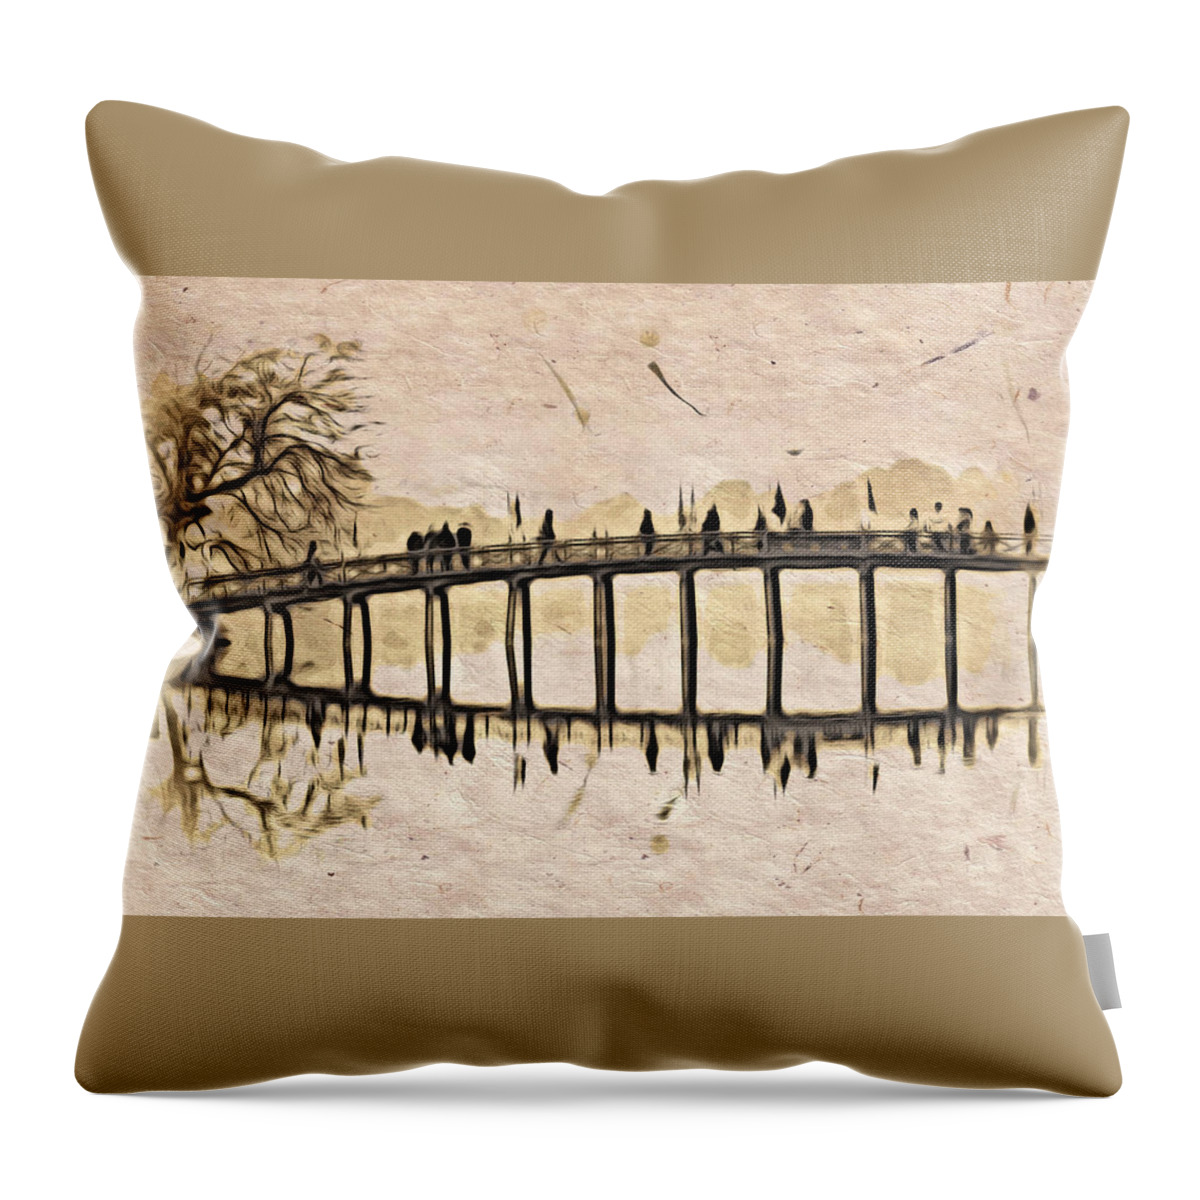 Asia Throw Pillow featuring the digital art Pagoda Bridge by Cameron Wood